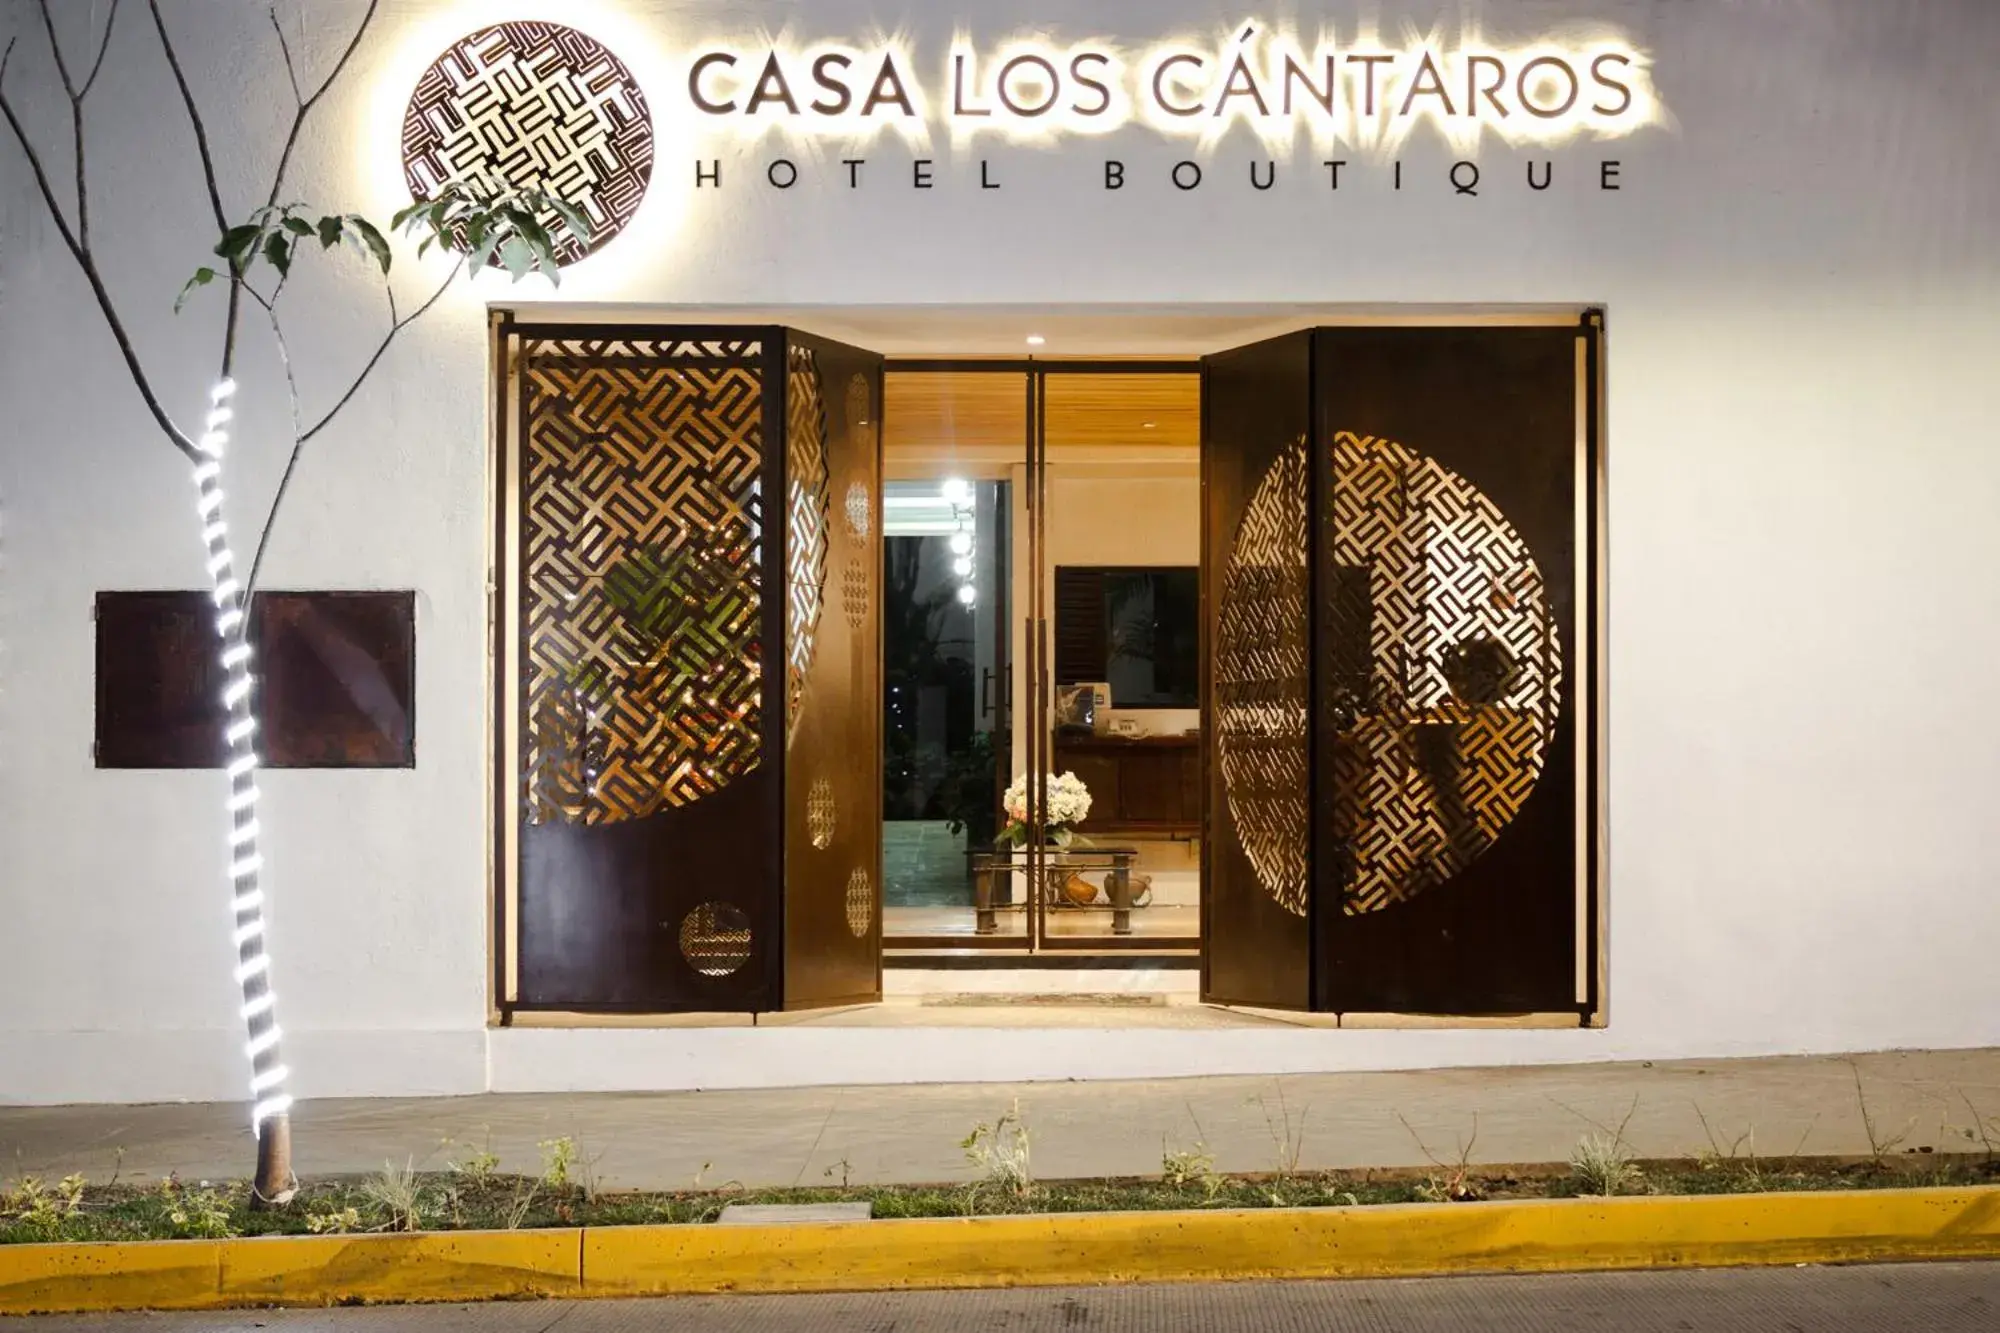 Facade/entrance in Casa los Cantaros Hotel Boutique